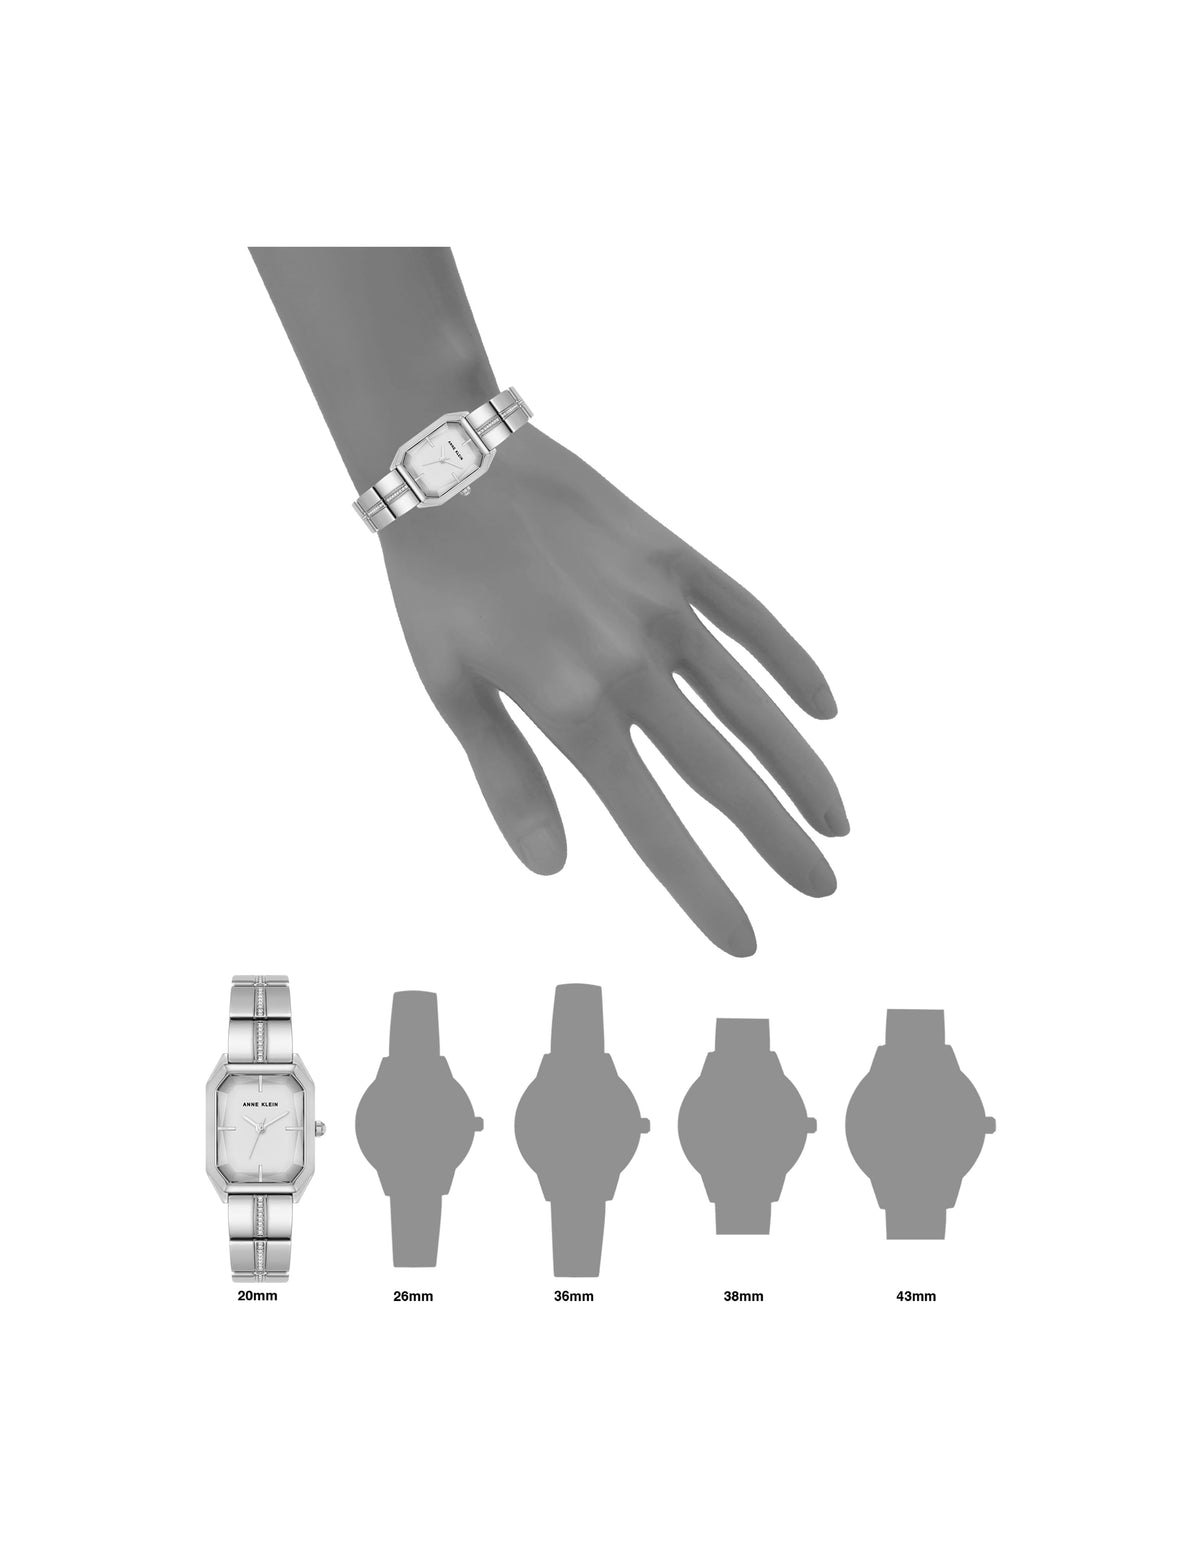 Anne Klein  Iconic Octagonal Crystal Bracelet Watch